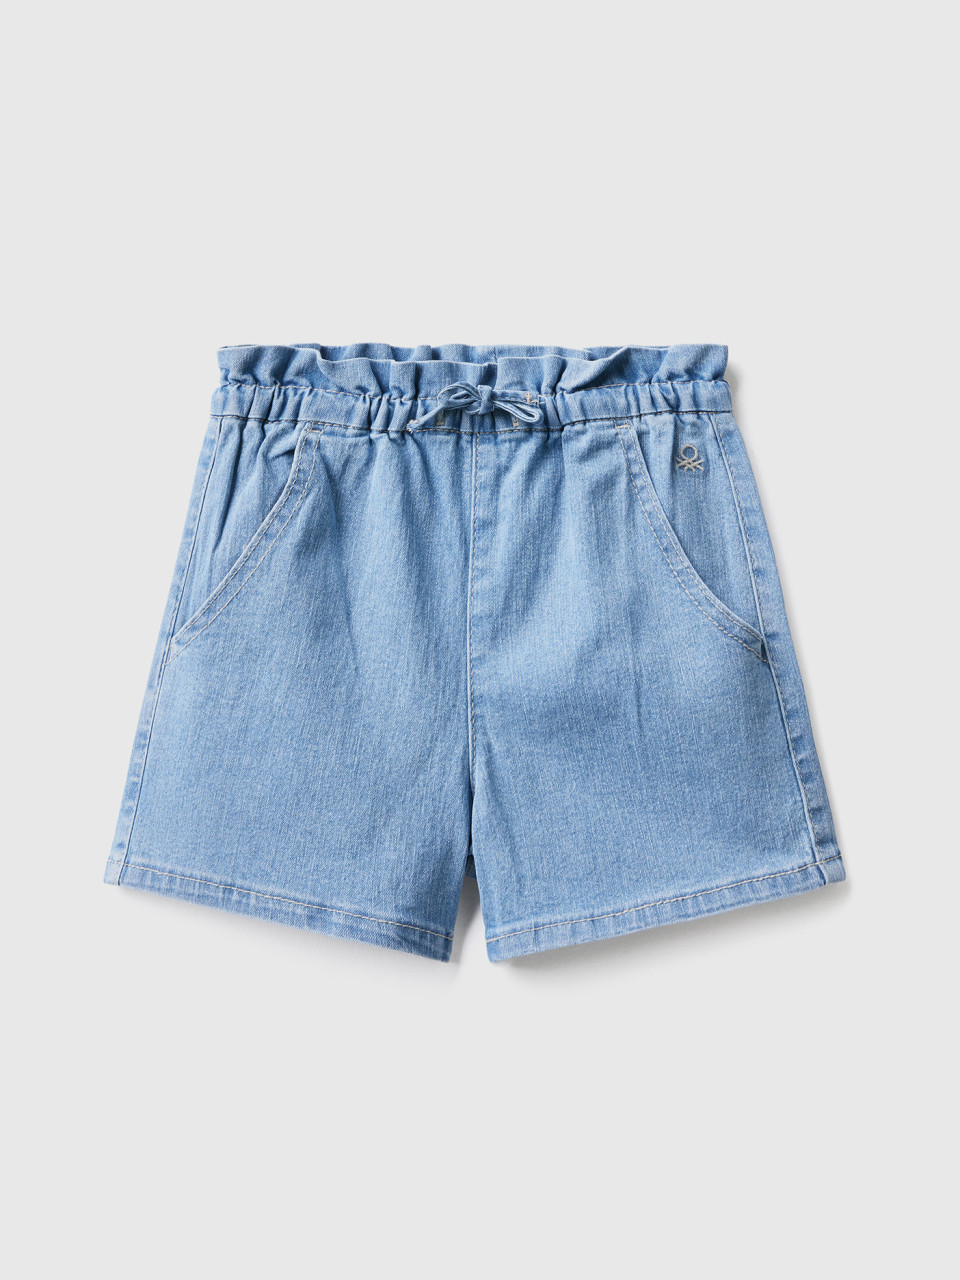 Benetton, eco-recycle Denim Paperbag Shorts, Light Blue, Kids